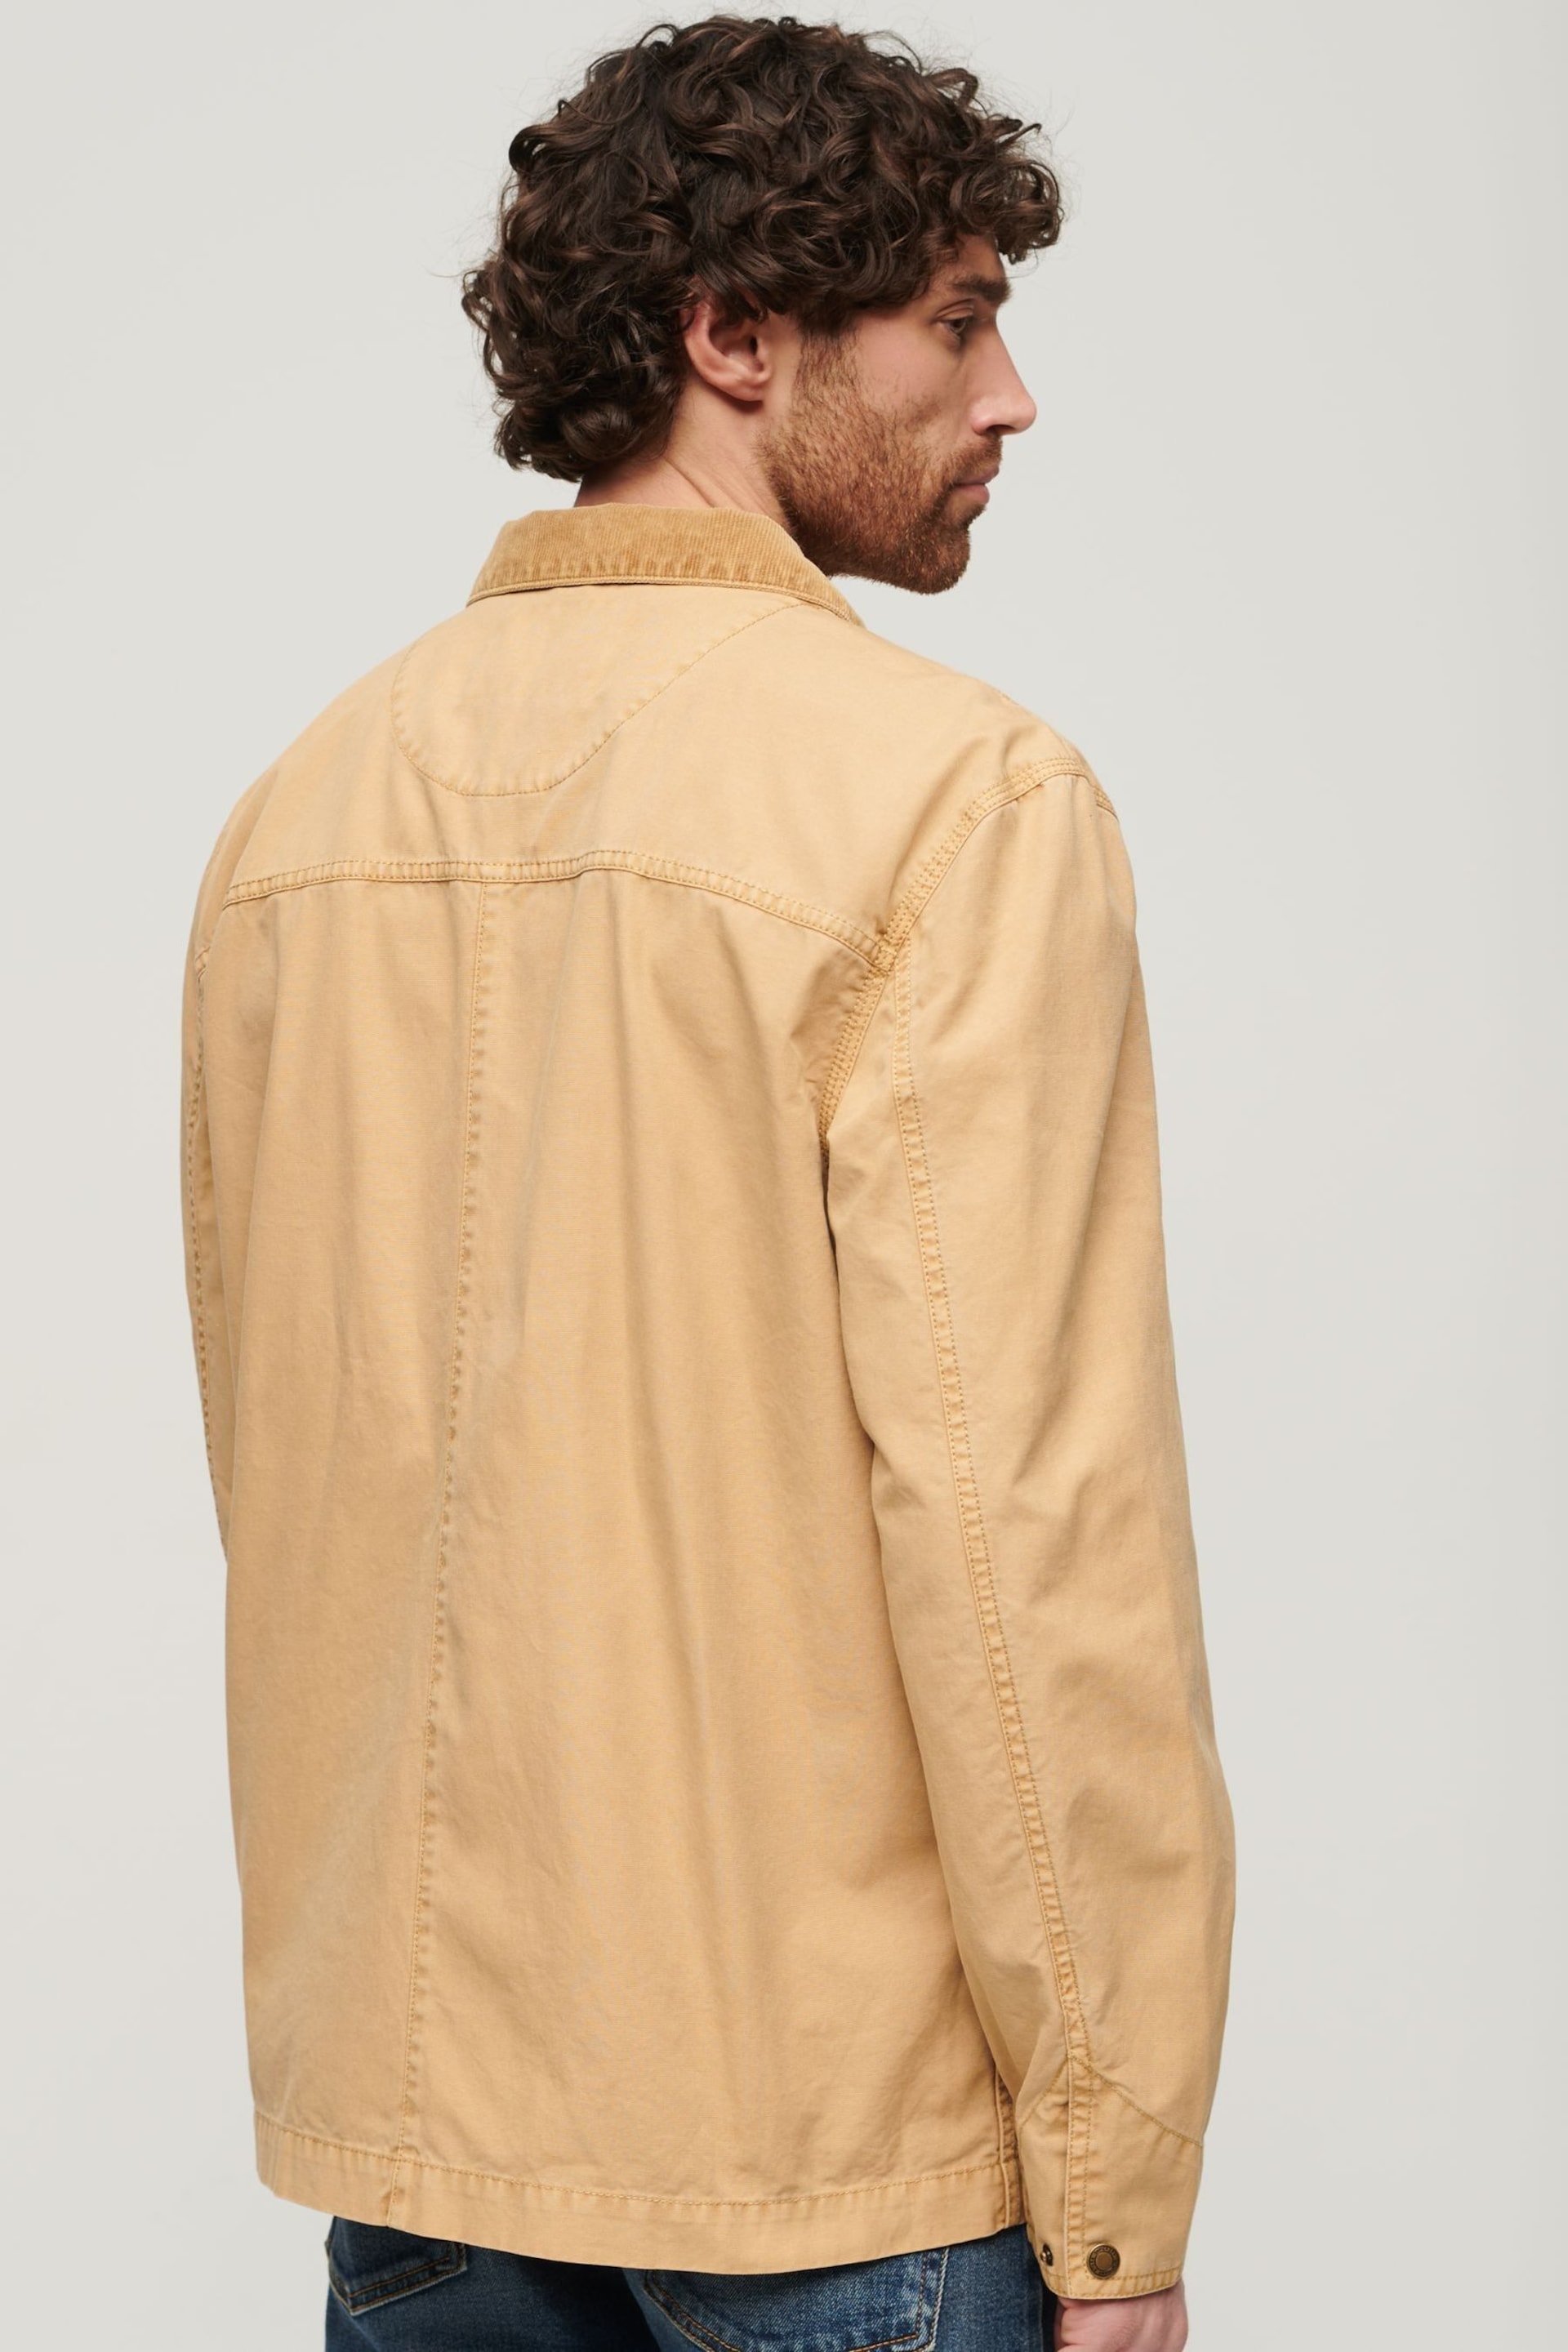 Superdry Brown Merchant Cotton Work Jacket - Image 3 of 4